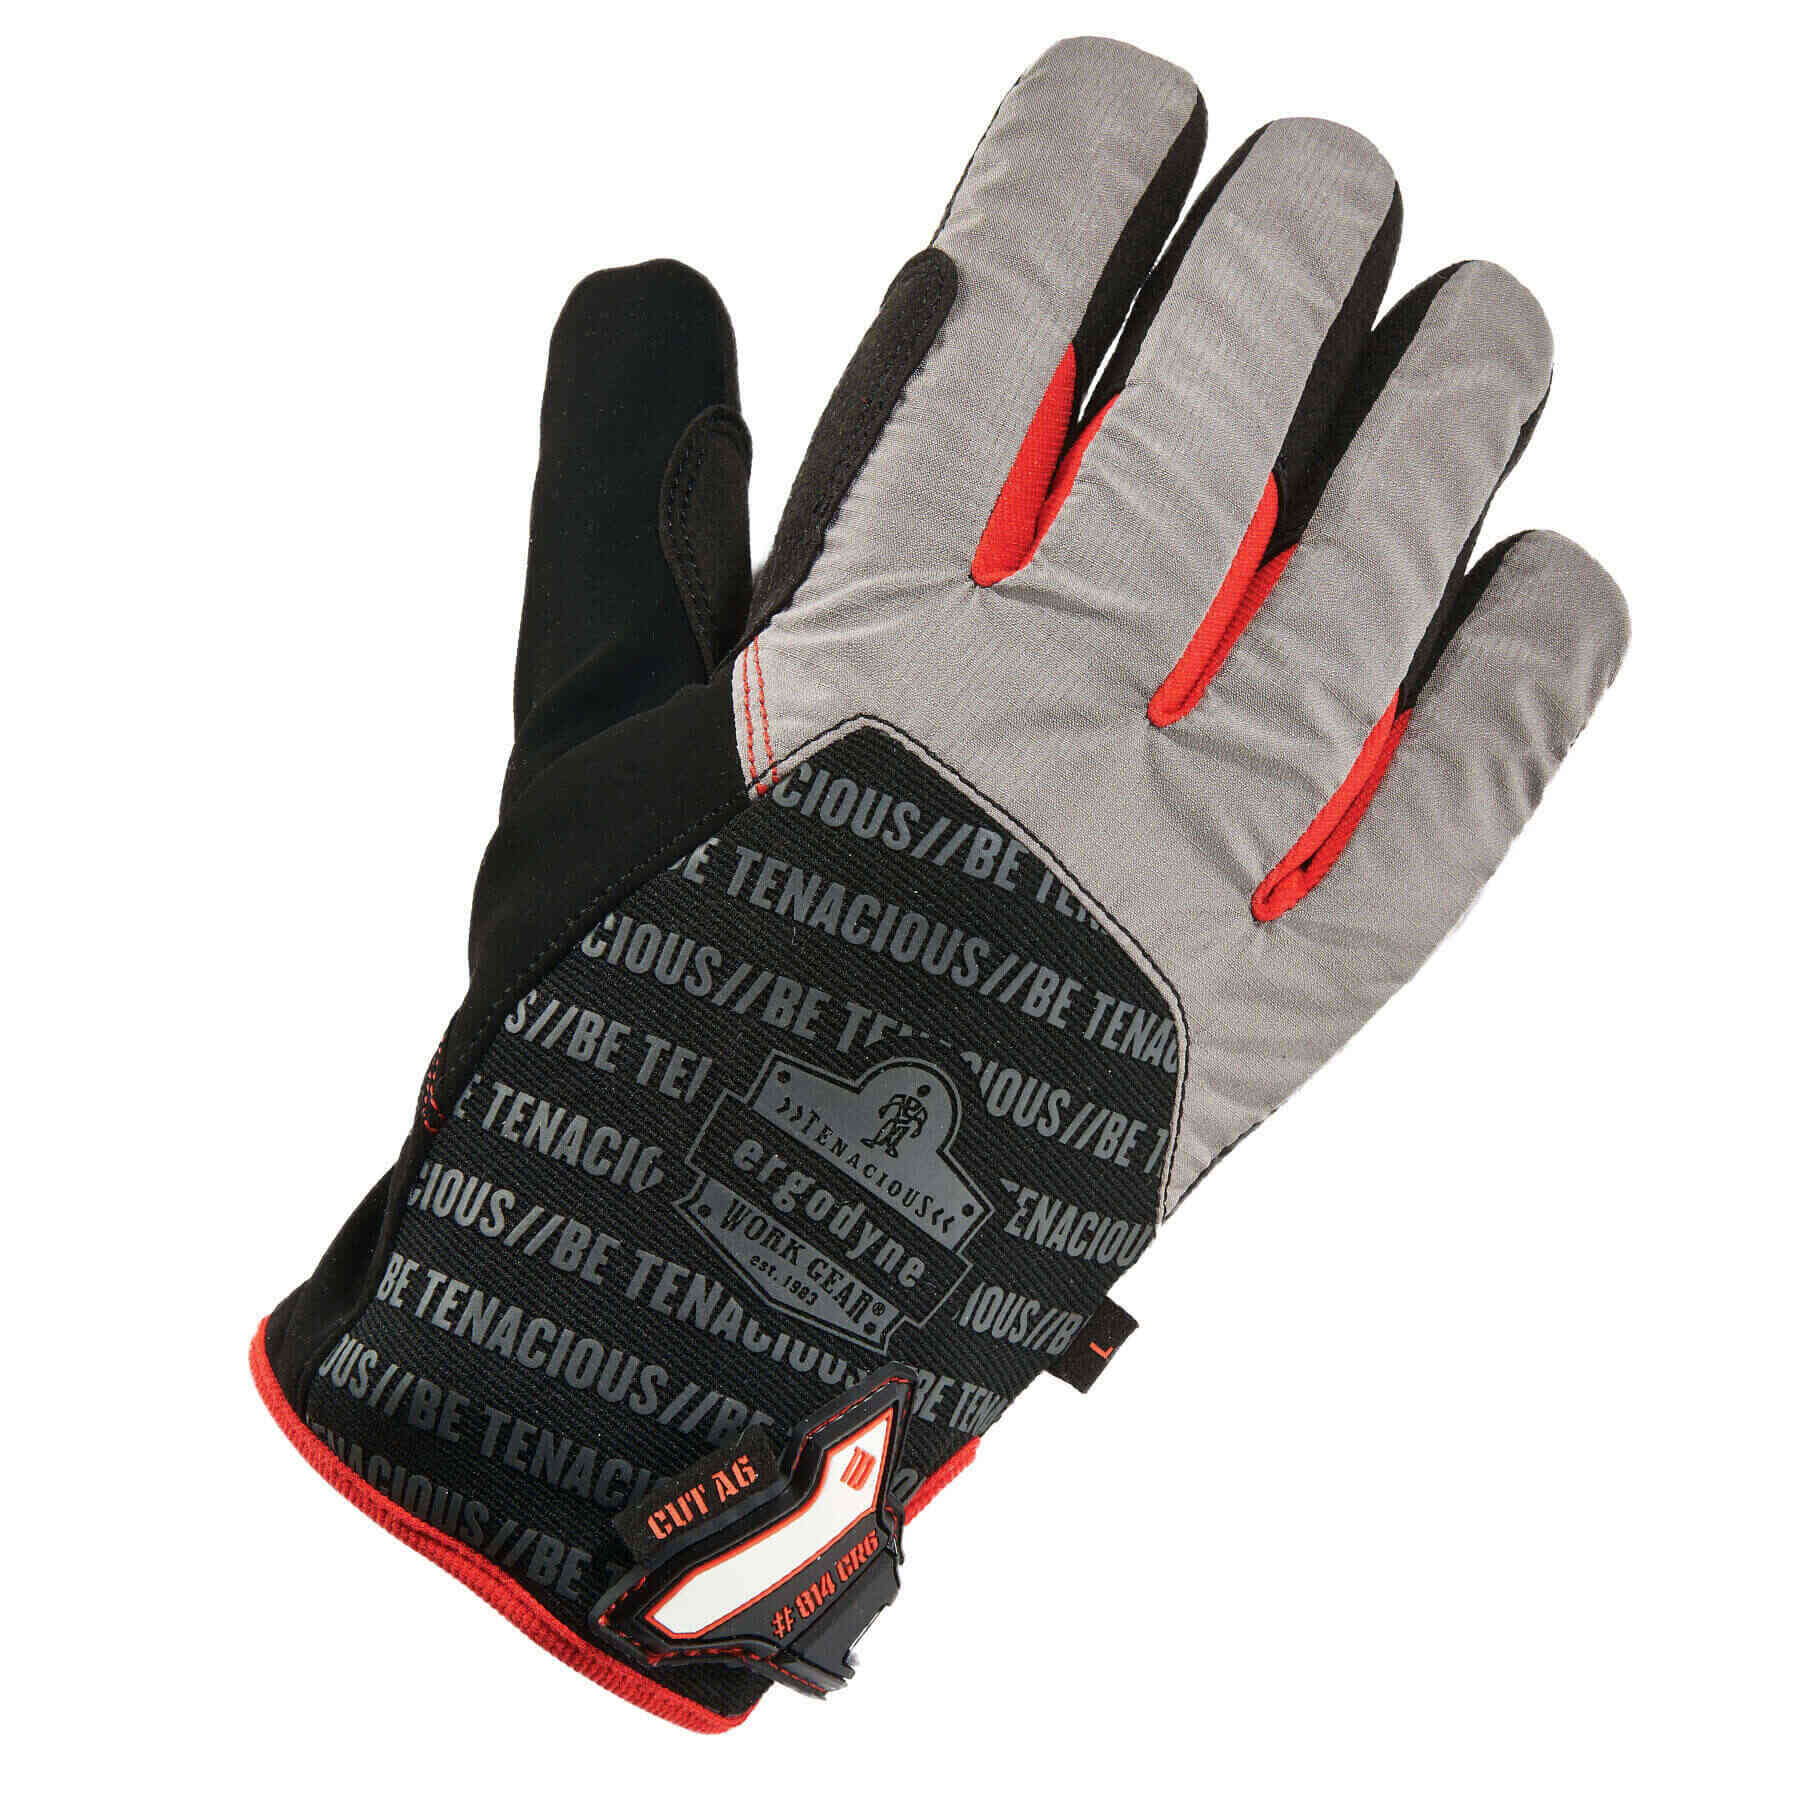 Ergodyne Utility + Cut Resistant Gloves - XL